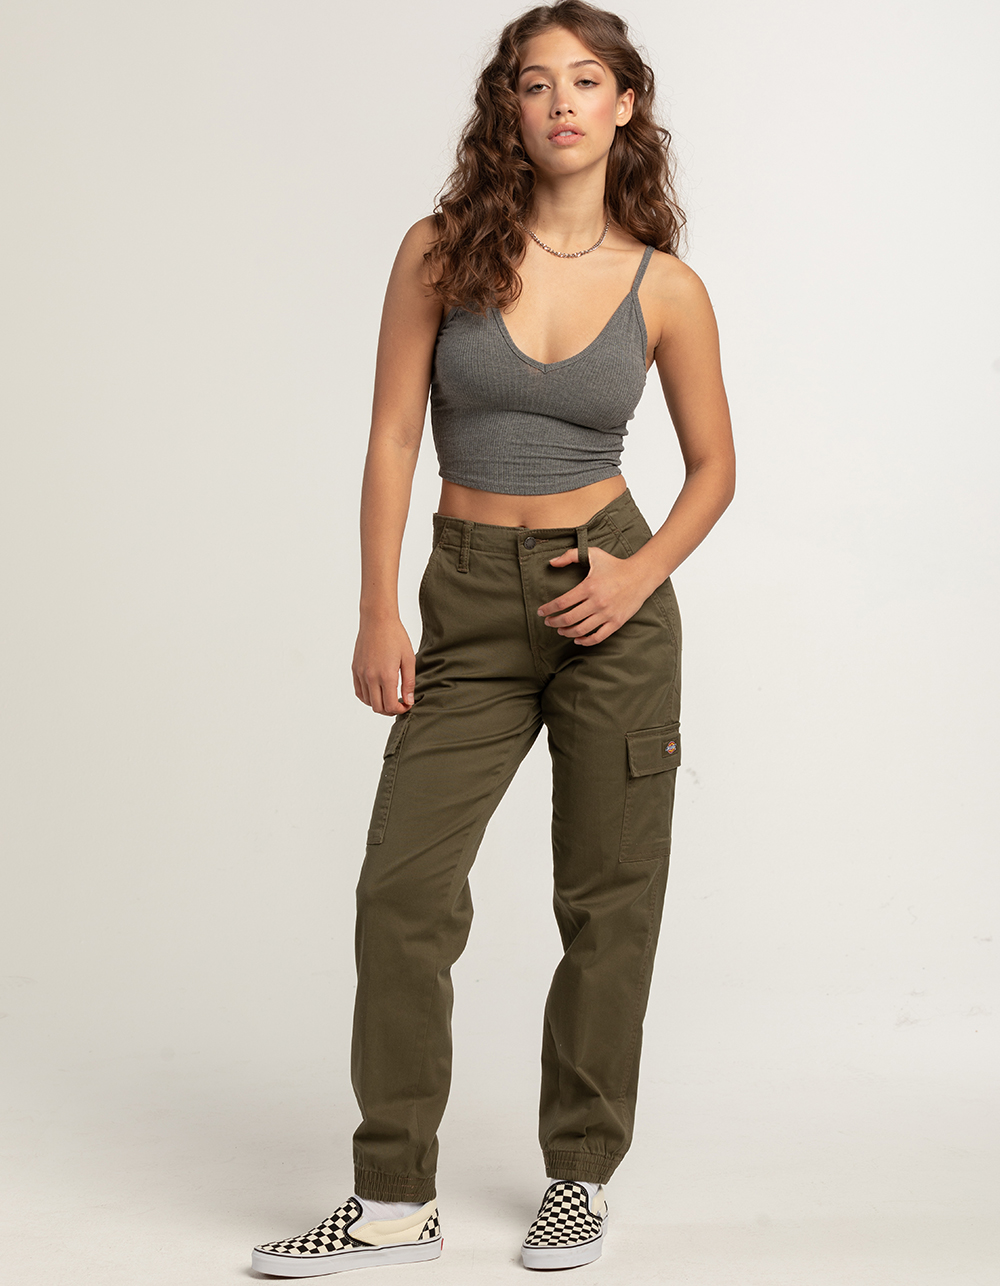 Womens Tactical Cargo Pants  Shop Army Surplus World